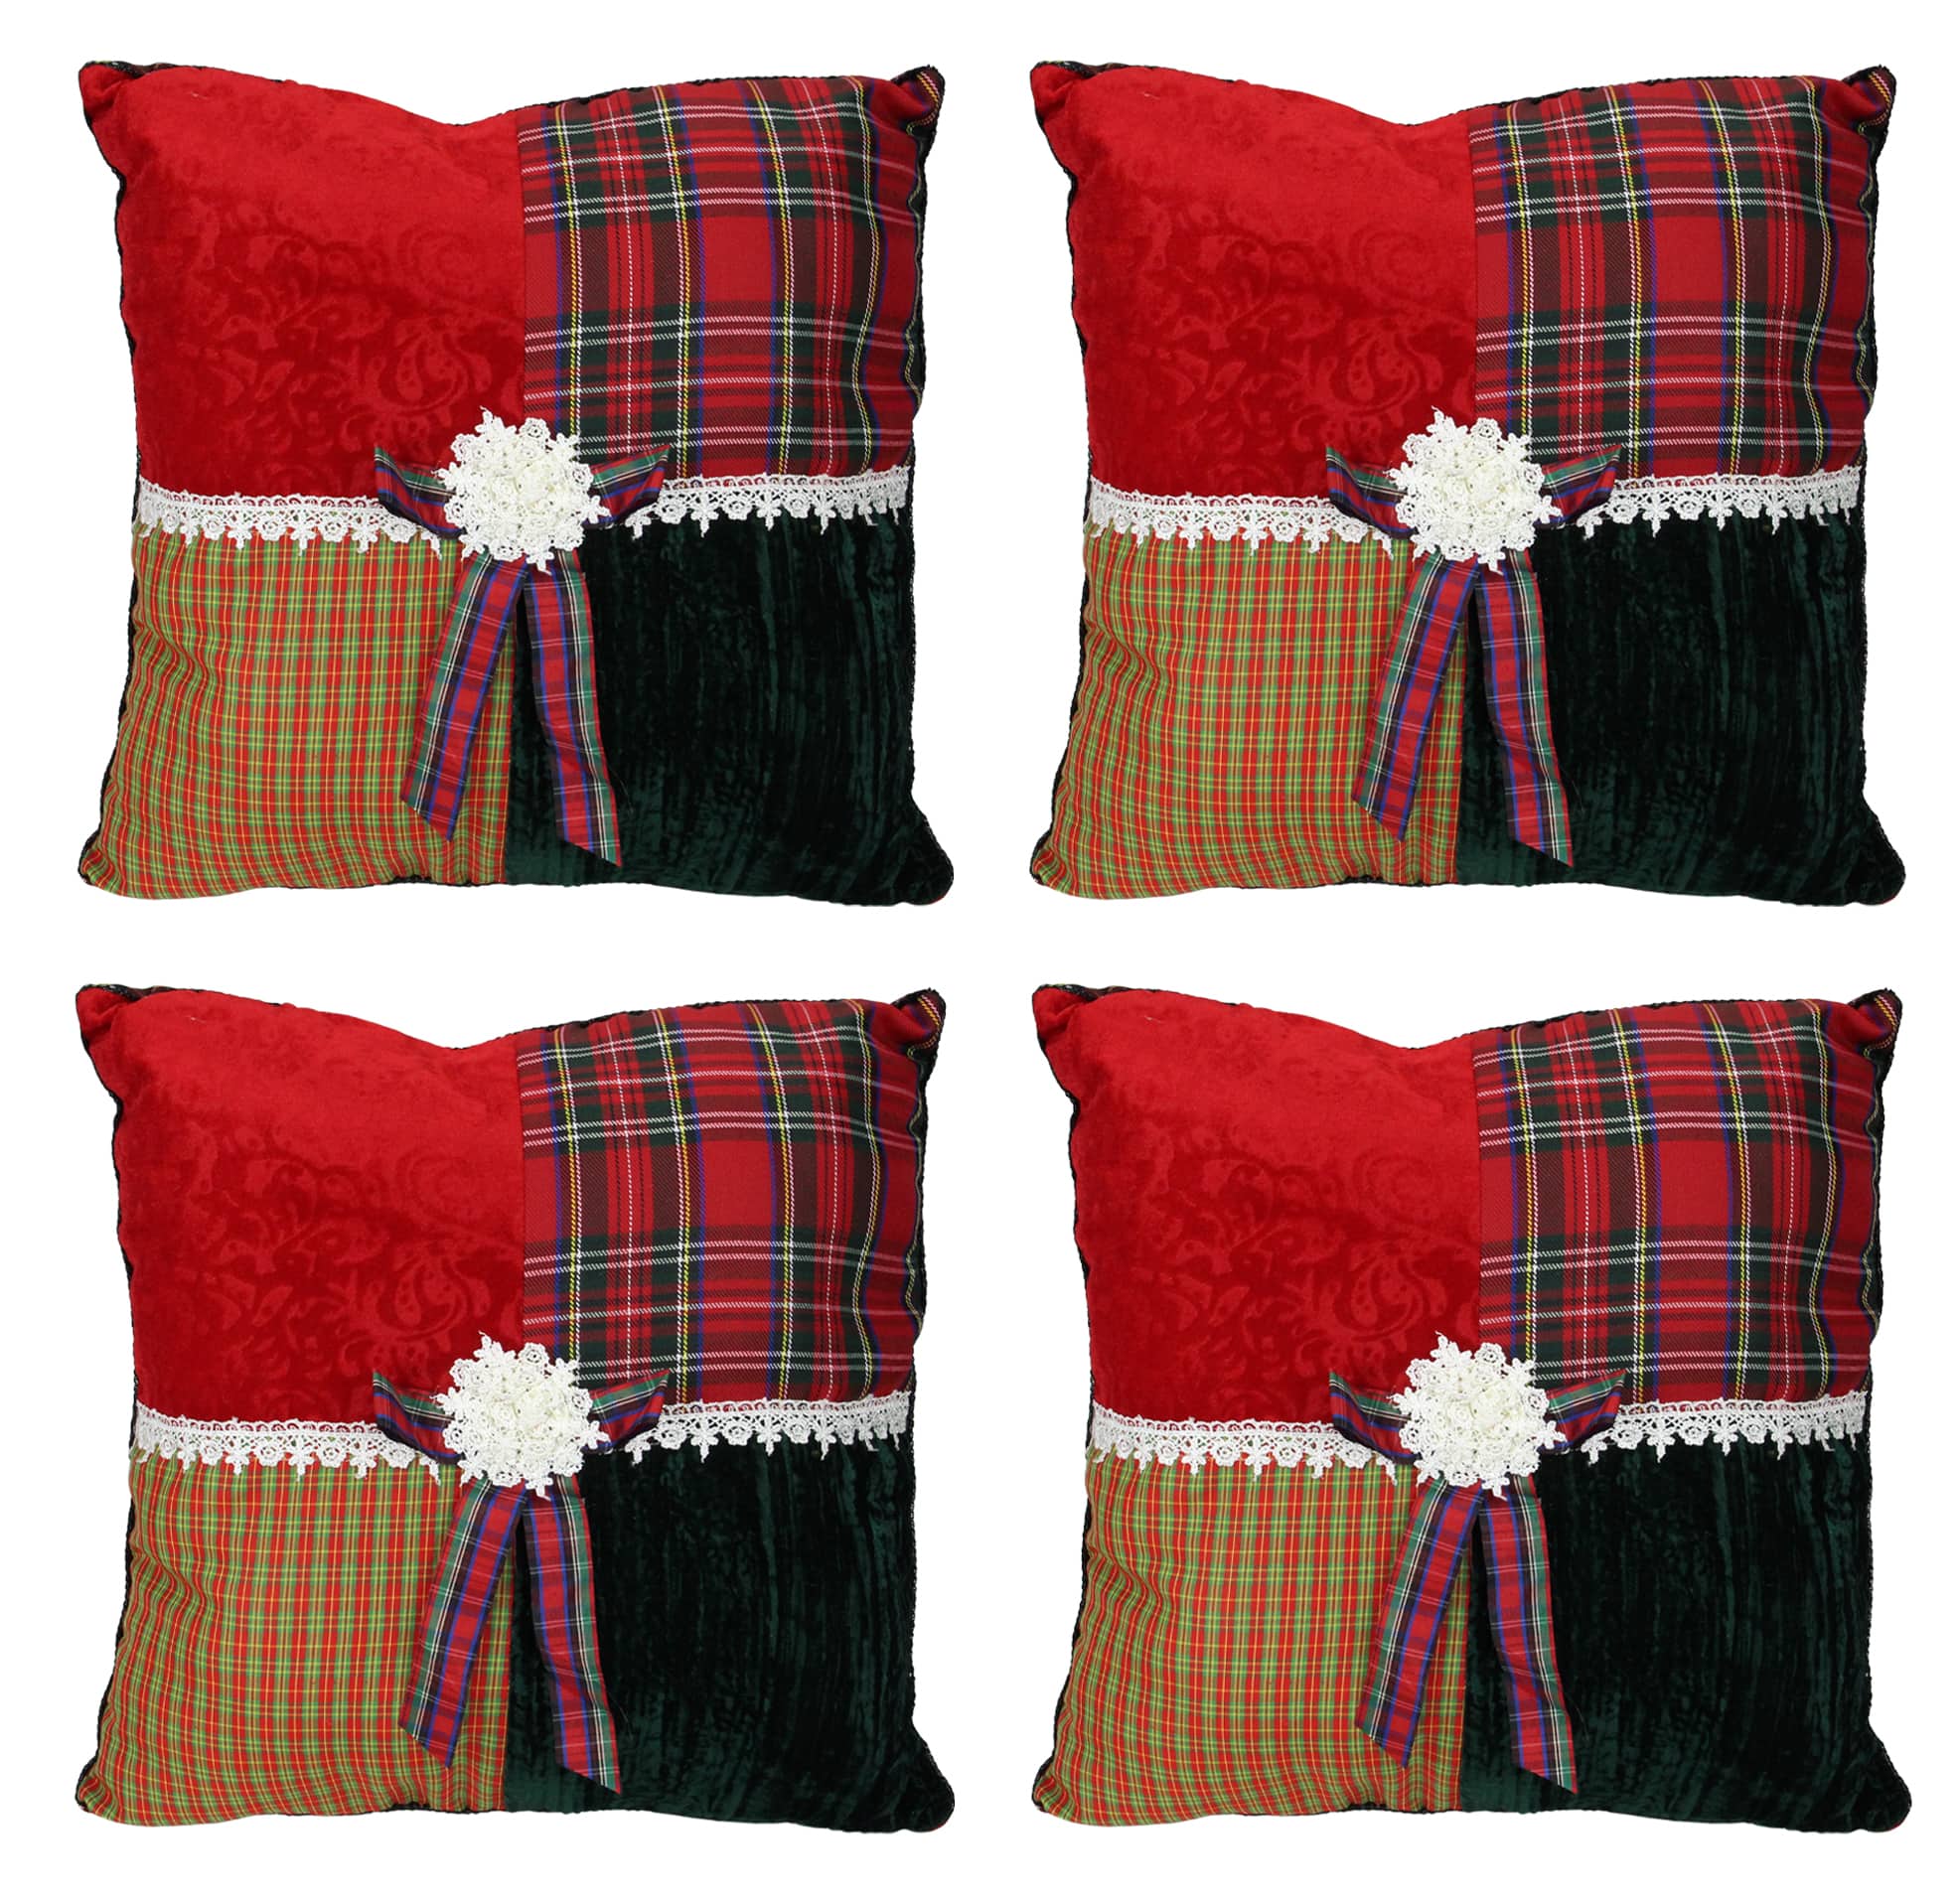 Square Textured Tartan Plaid Velvet Christmas Throw Pillows, 4ct.